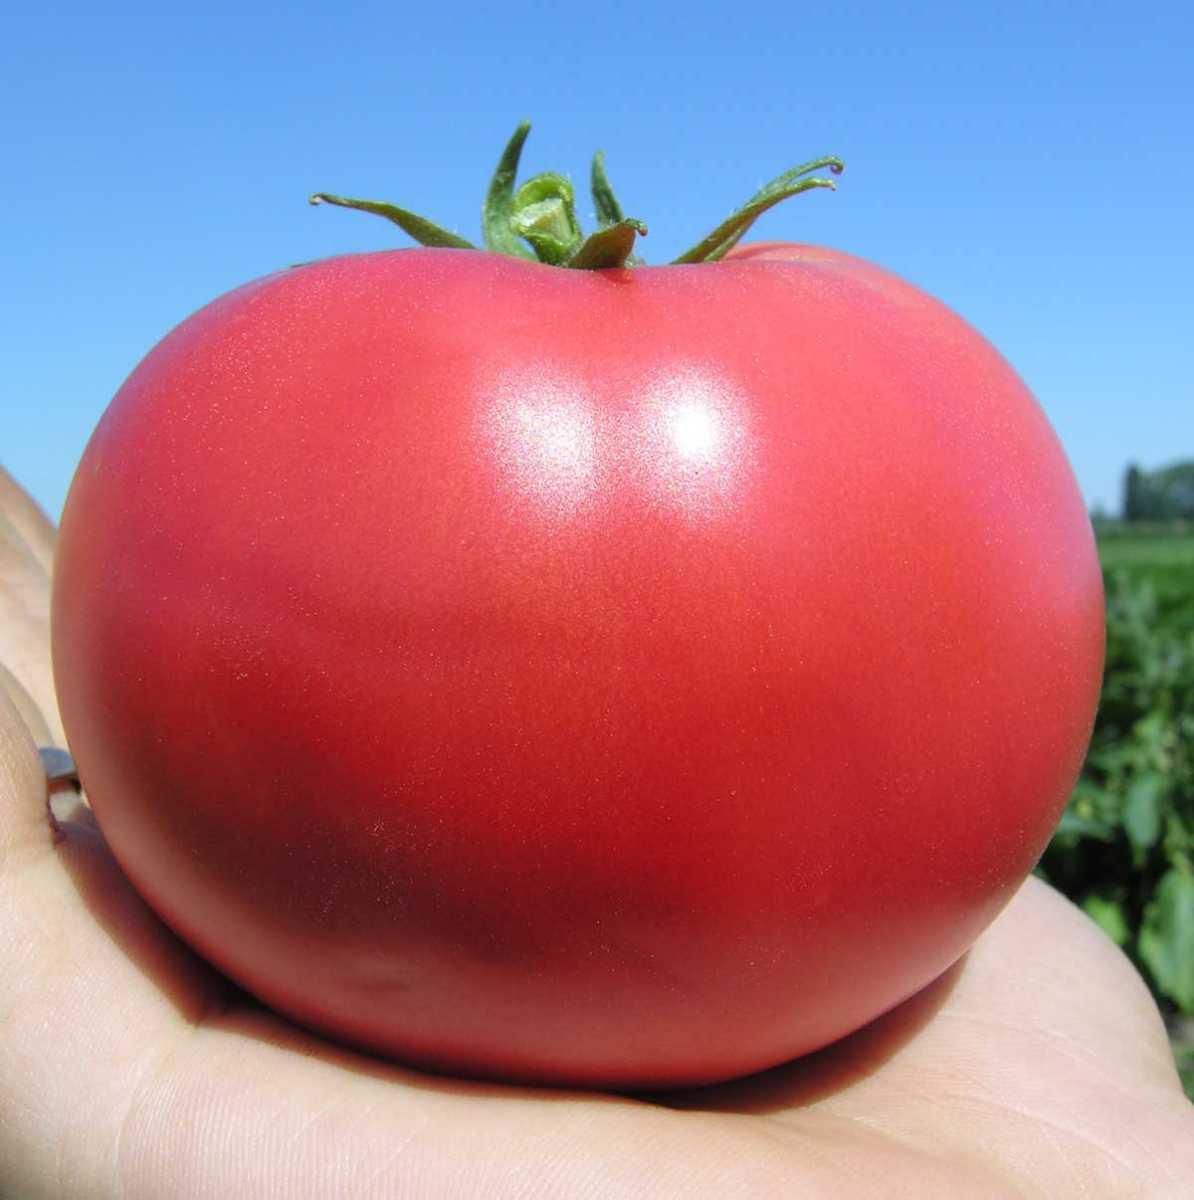 Характеристика томатов сорта тарпан